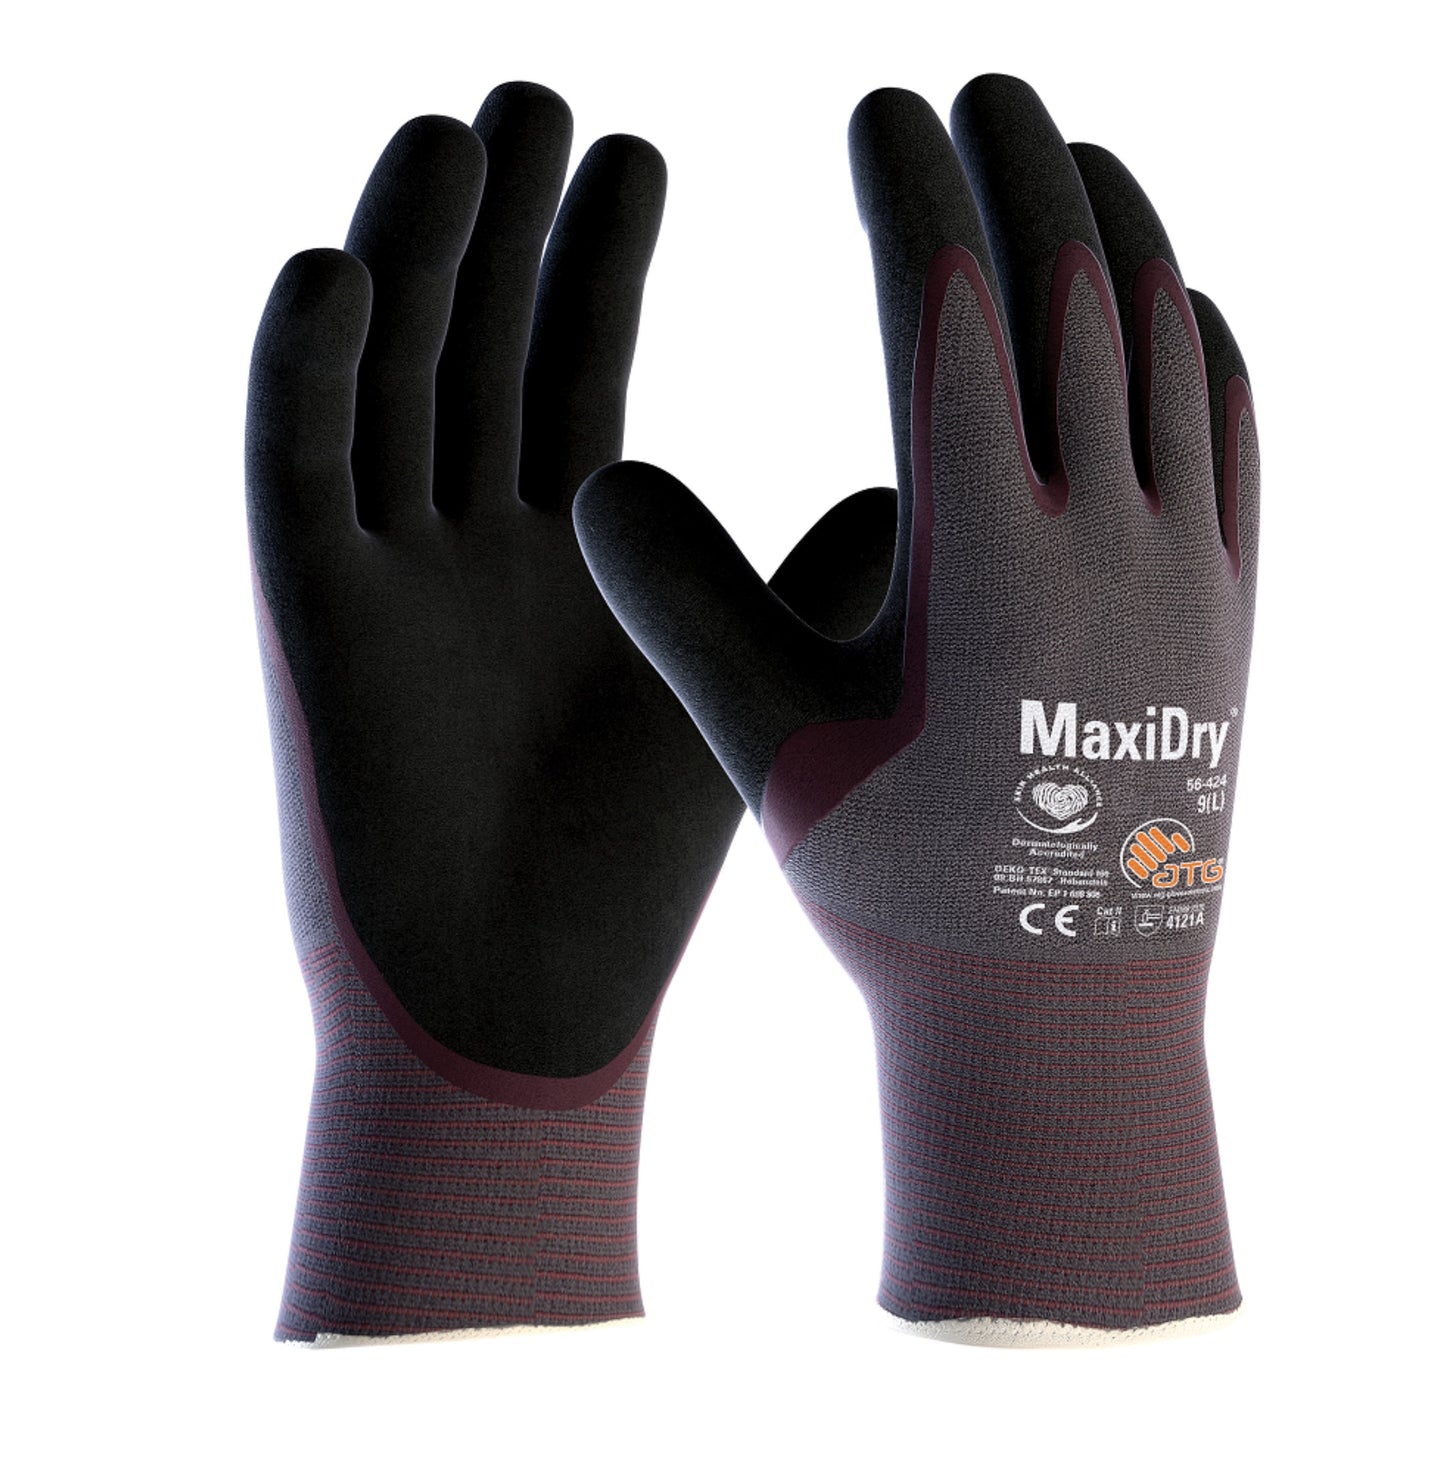 ATG MaxiDry Work Gloves 56-424 Liquid Oil Repellant Washable